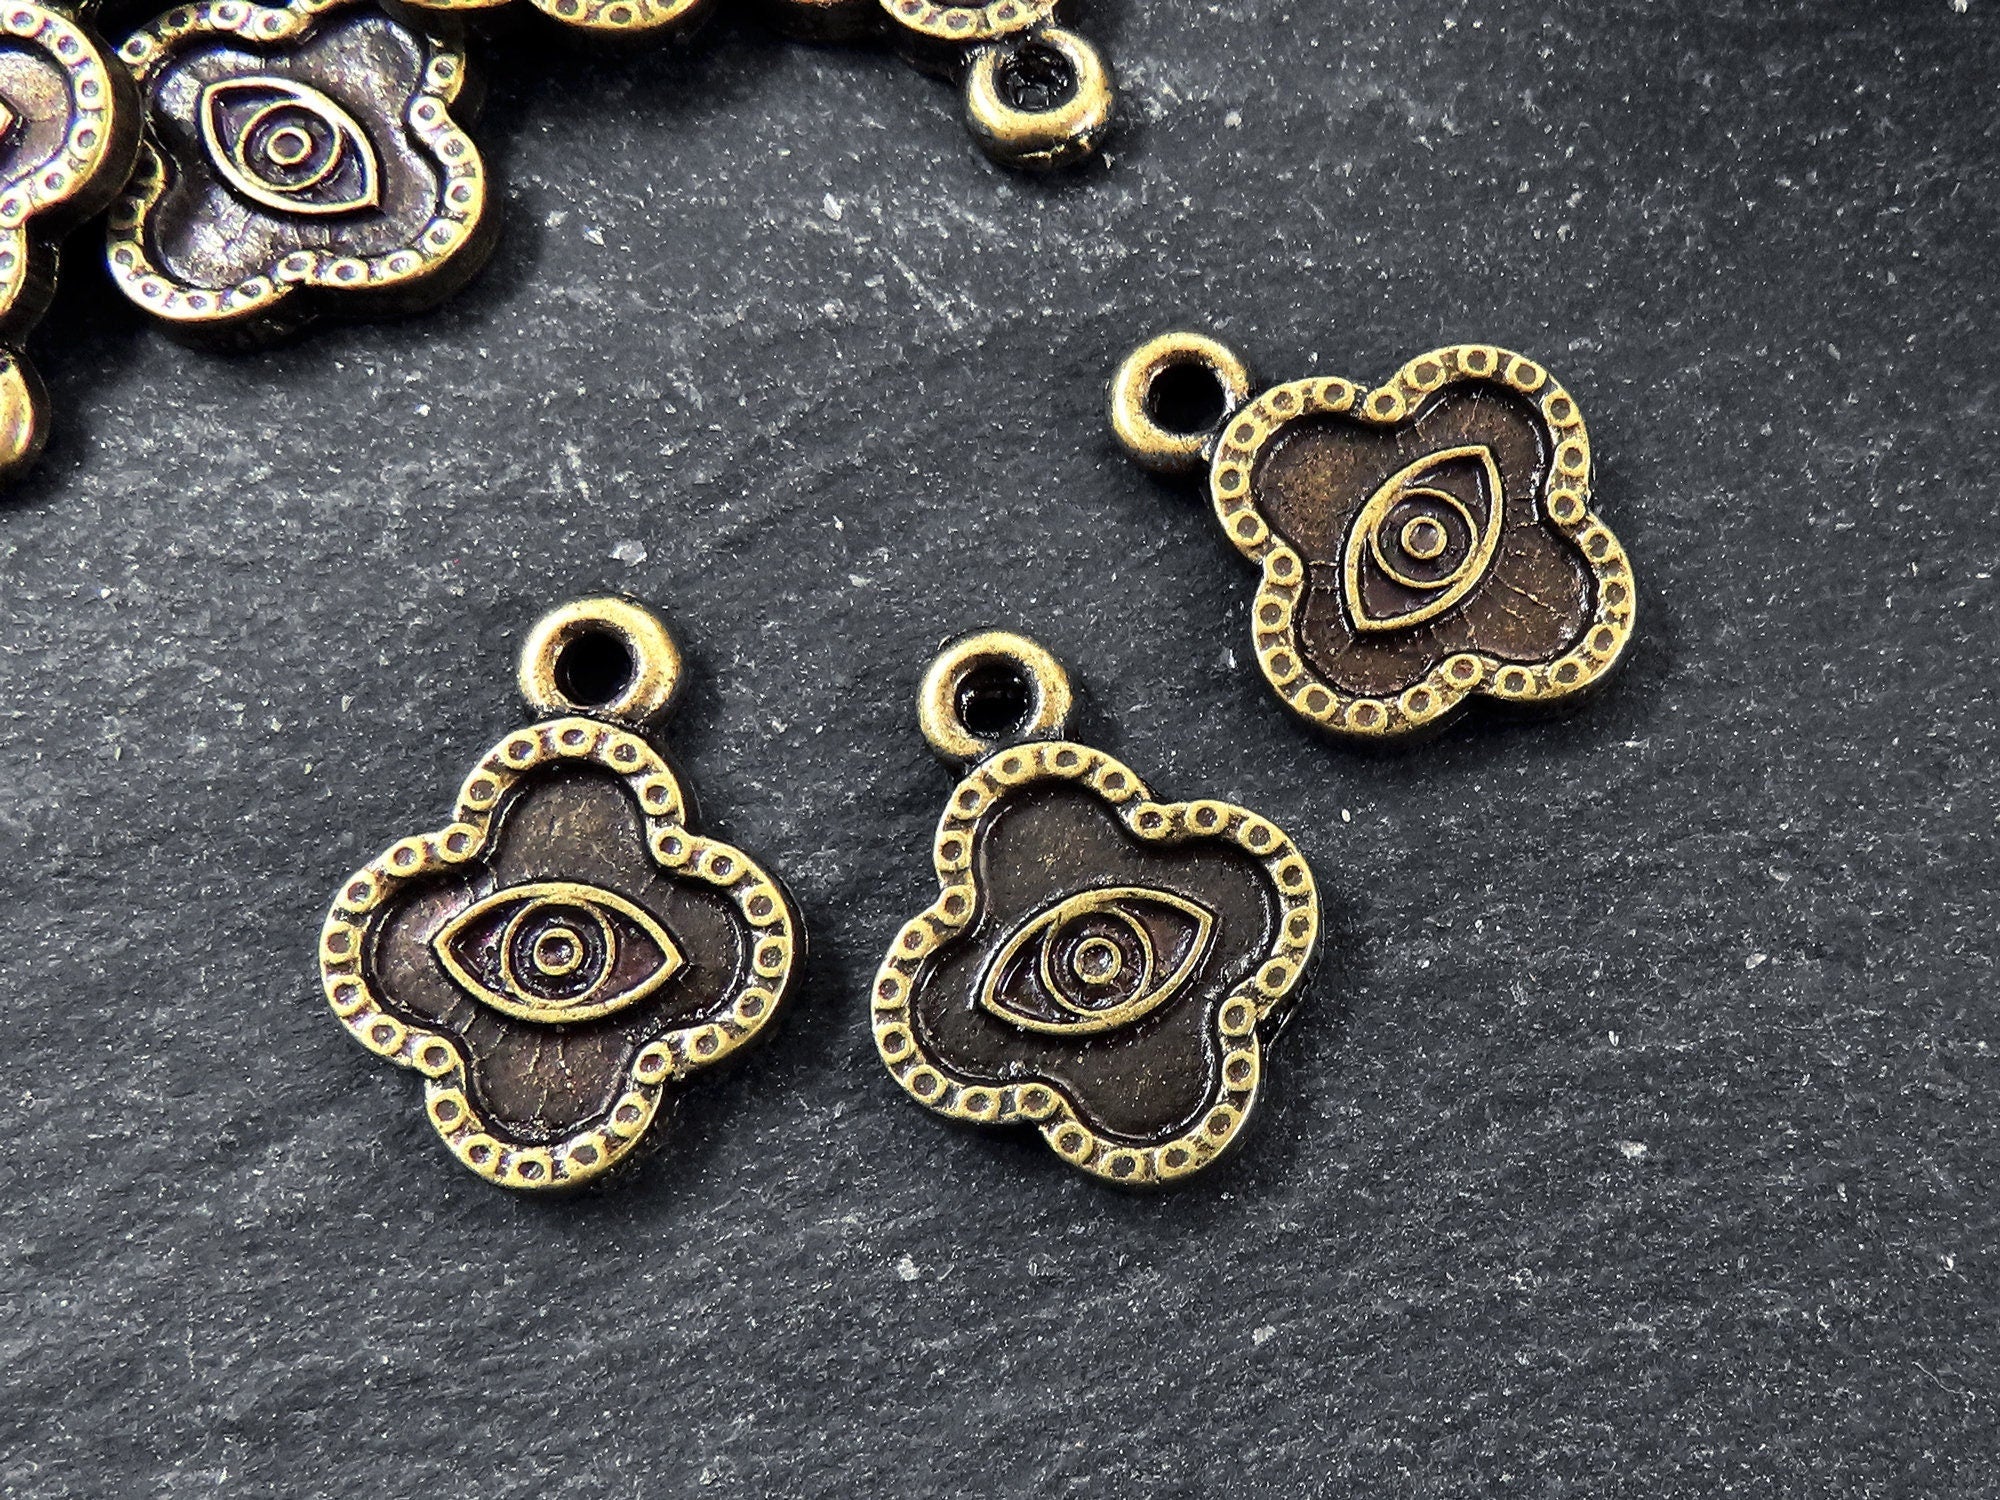 Quatrefoil Evil Eye Pendant Charms, Good Luck Protective Amulet Talisman, Eye Of The Beholder, Antique Bronze Plated, 3pcs